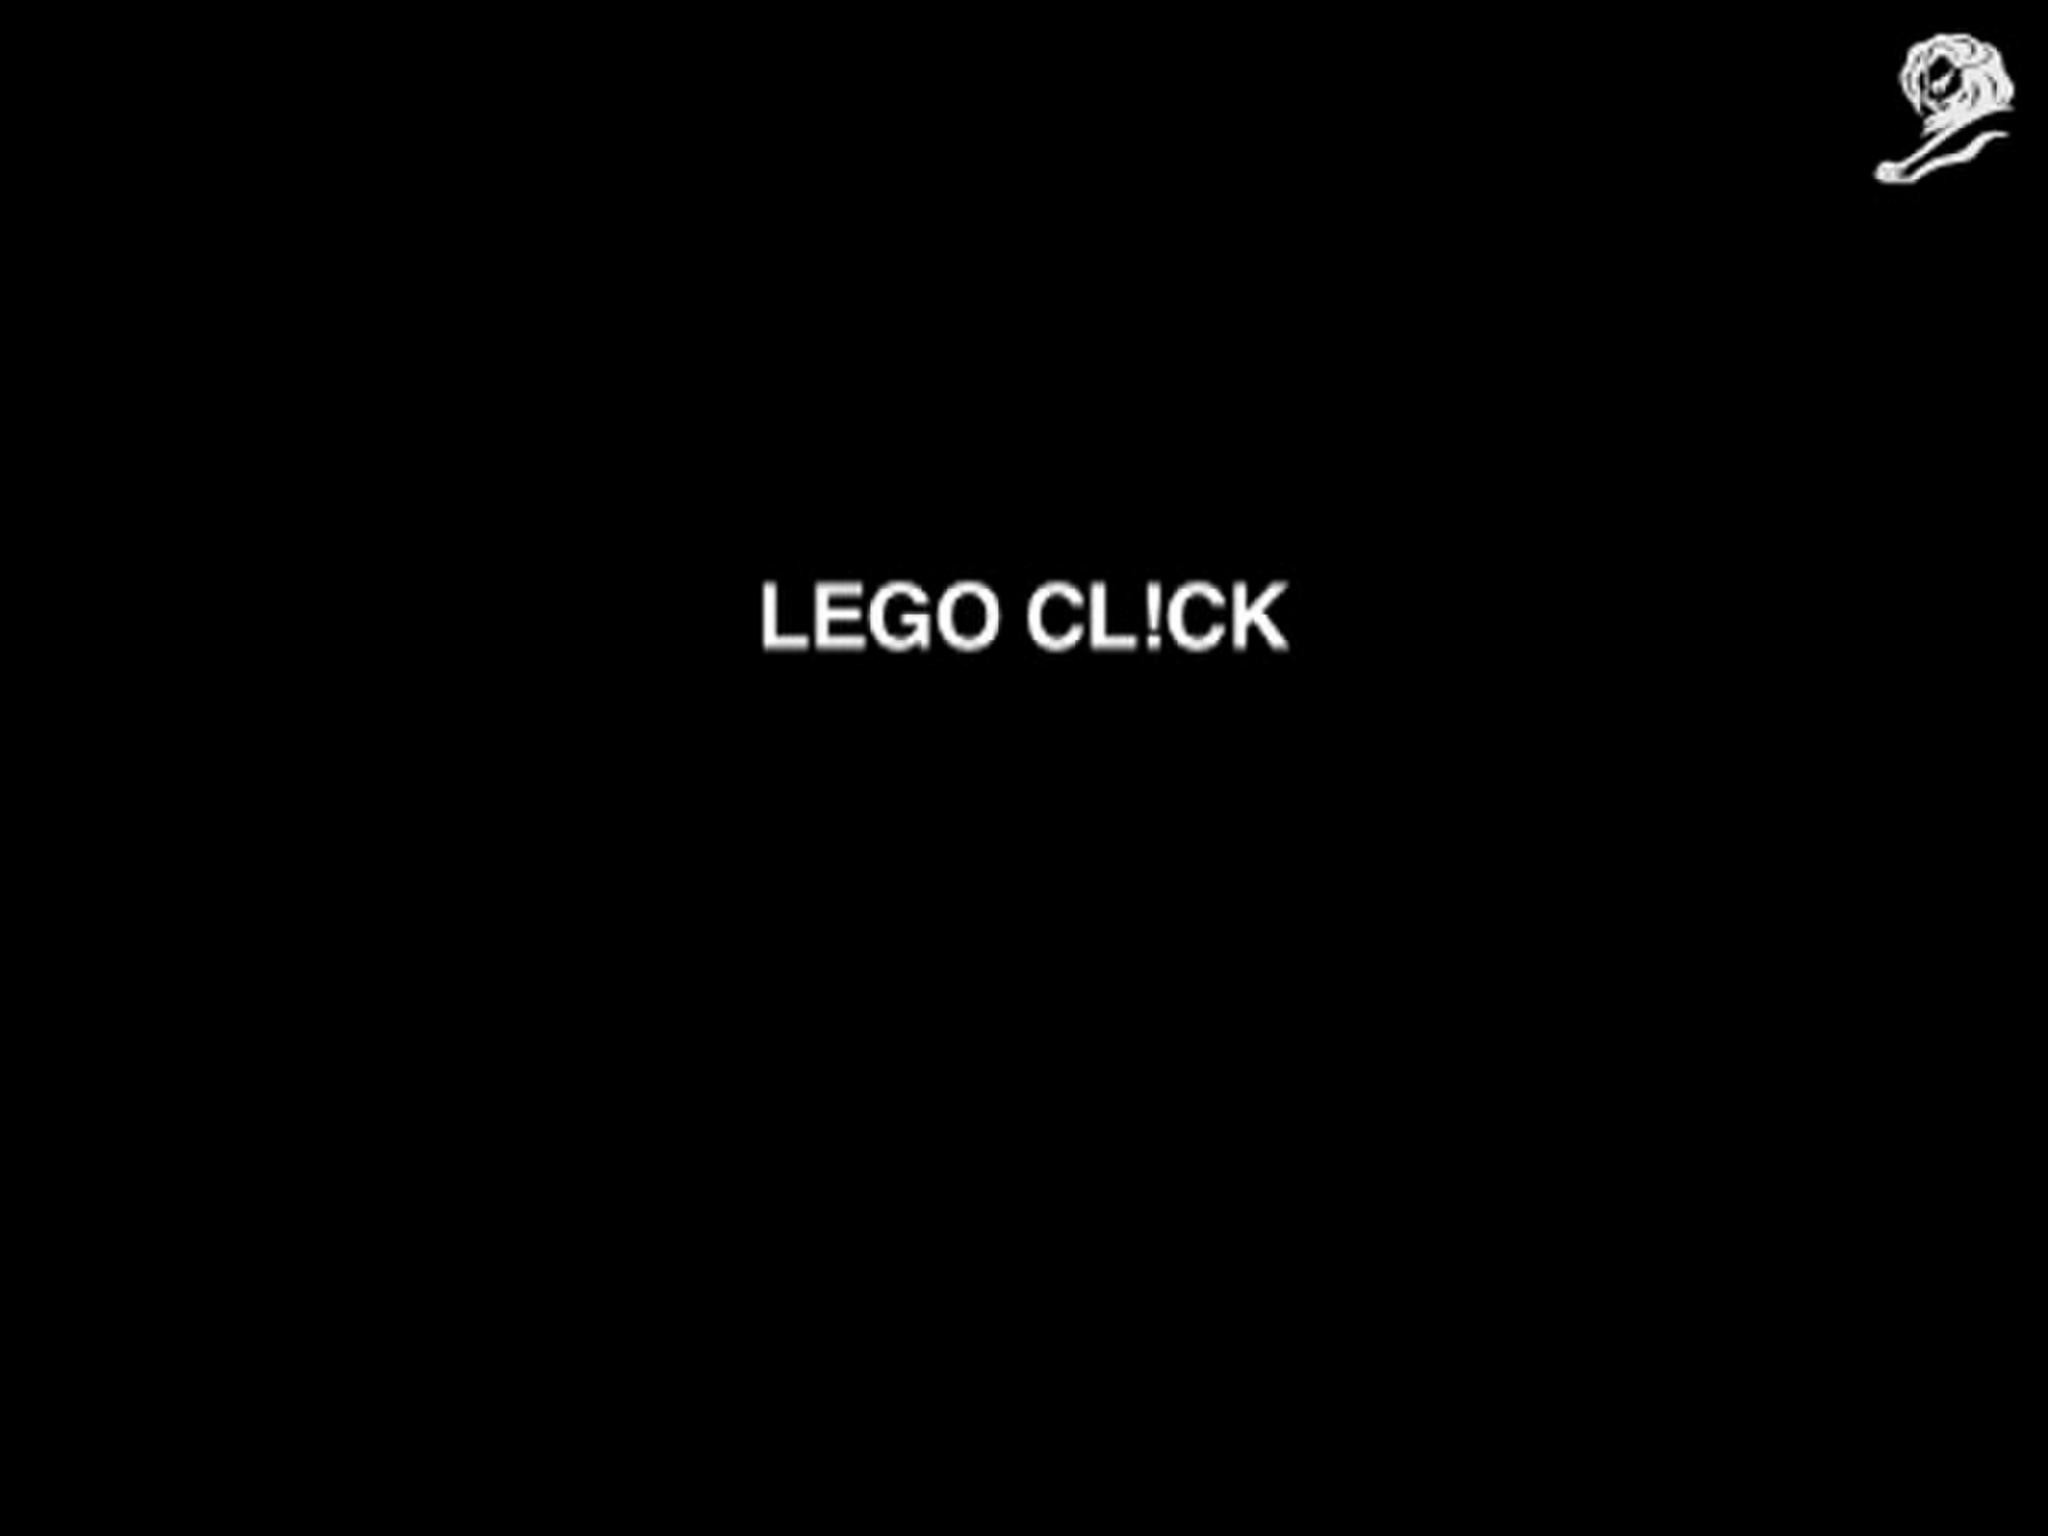 LEGO CL!CK